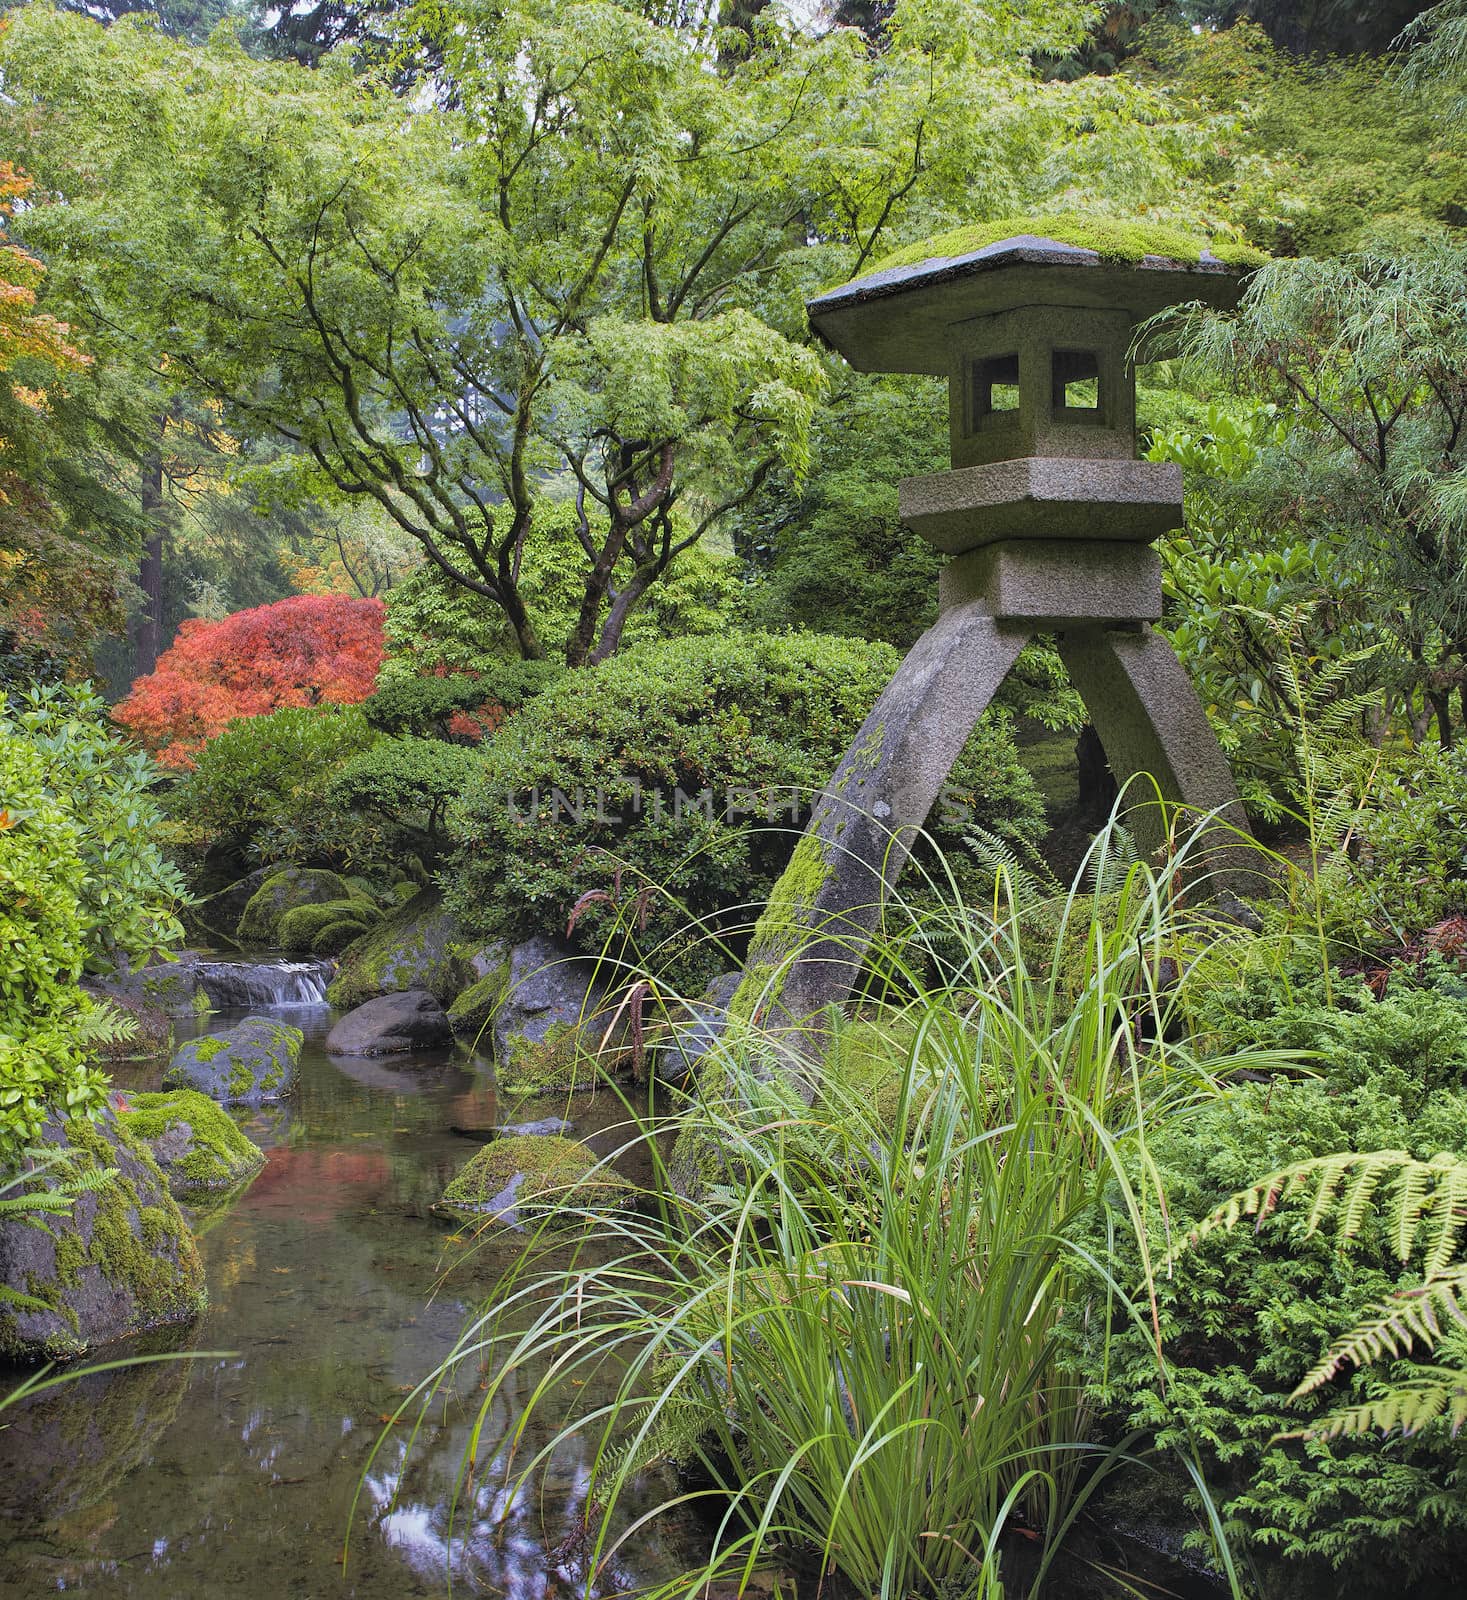 Japanese Stone Lantern by Water Stream by Davidgn